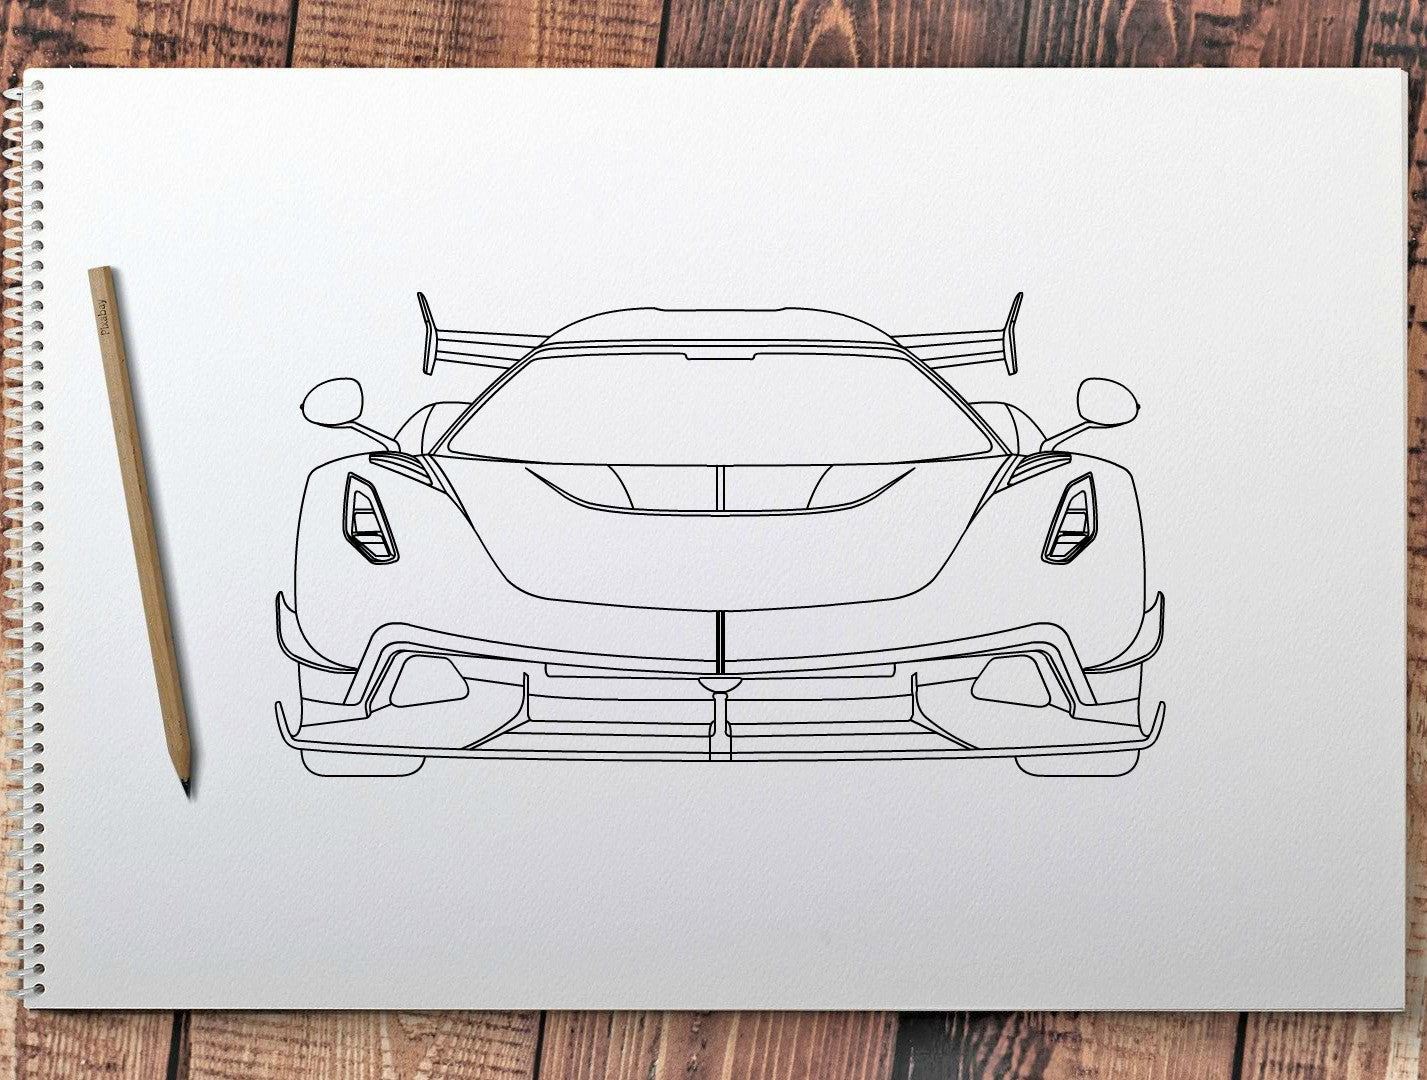 Car drawing 160114. 2016 Hyundai Elantra. Prisma on paper. Kim.J.H | Car  drawing pencil, Car drawings, Drawings